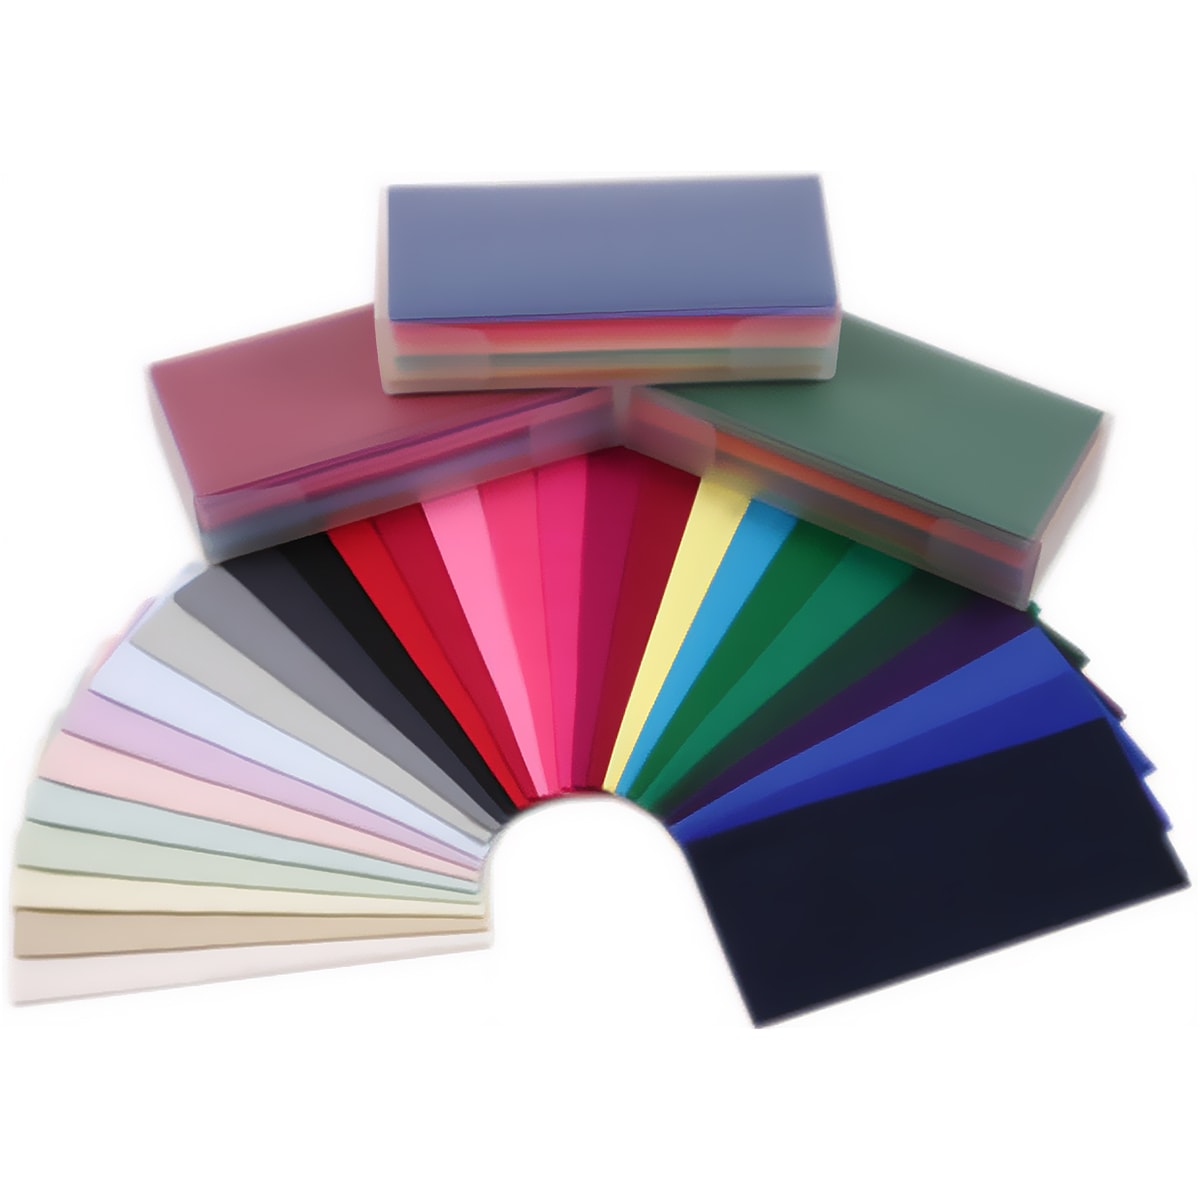 Colour Analysis Starter Kit : Drapes & Tutorial PDF (Limited